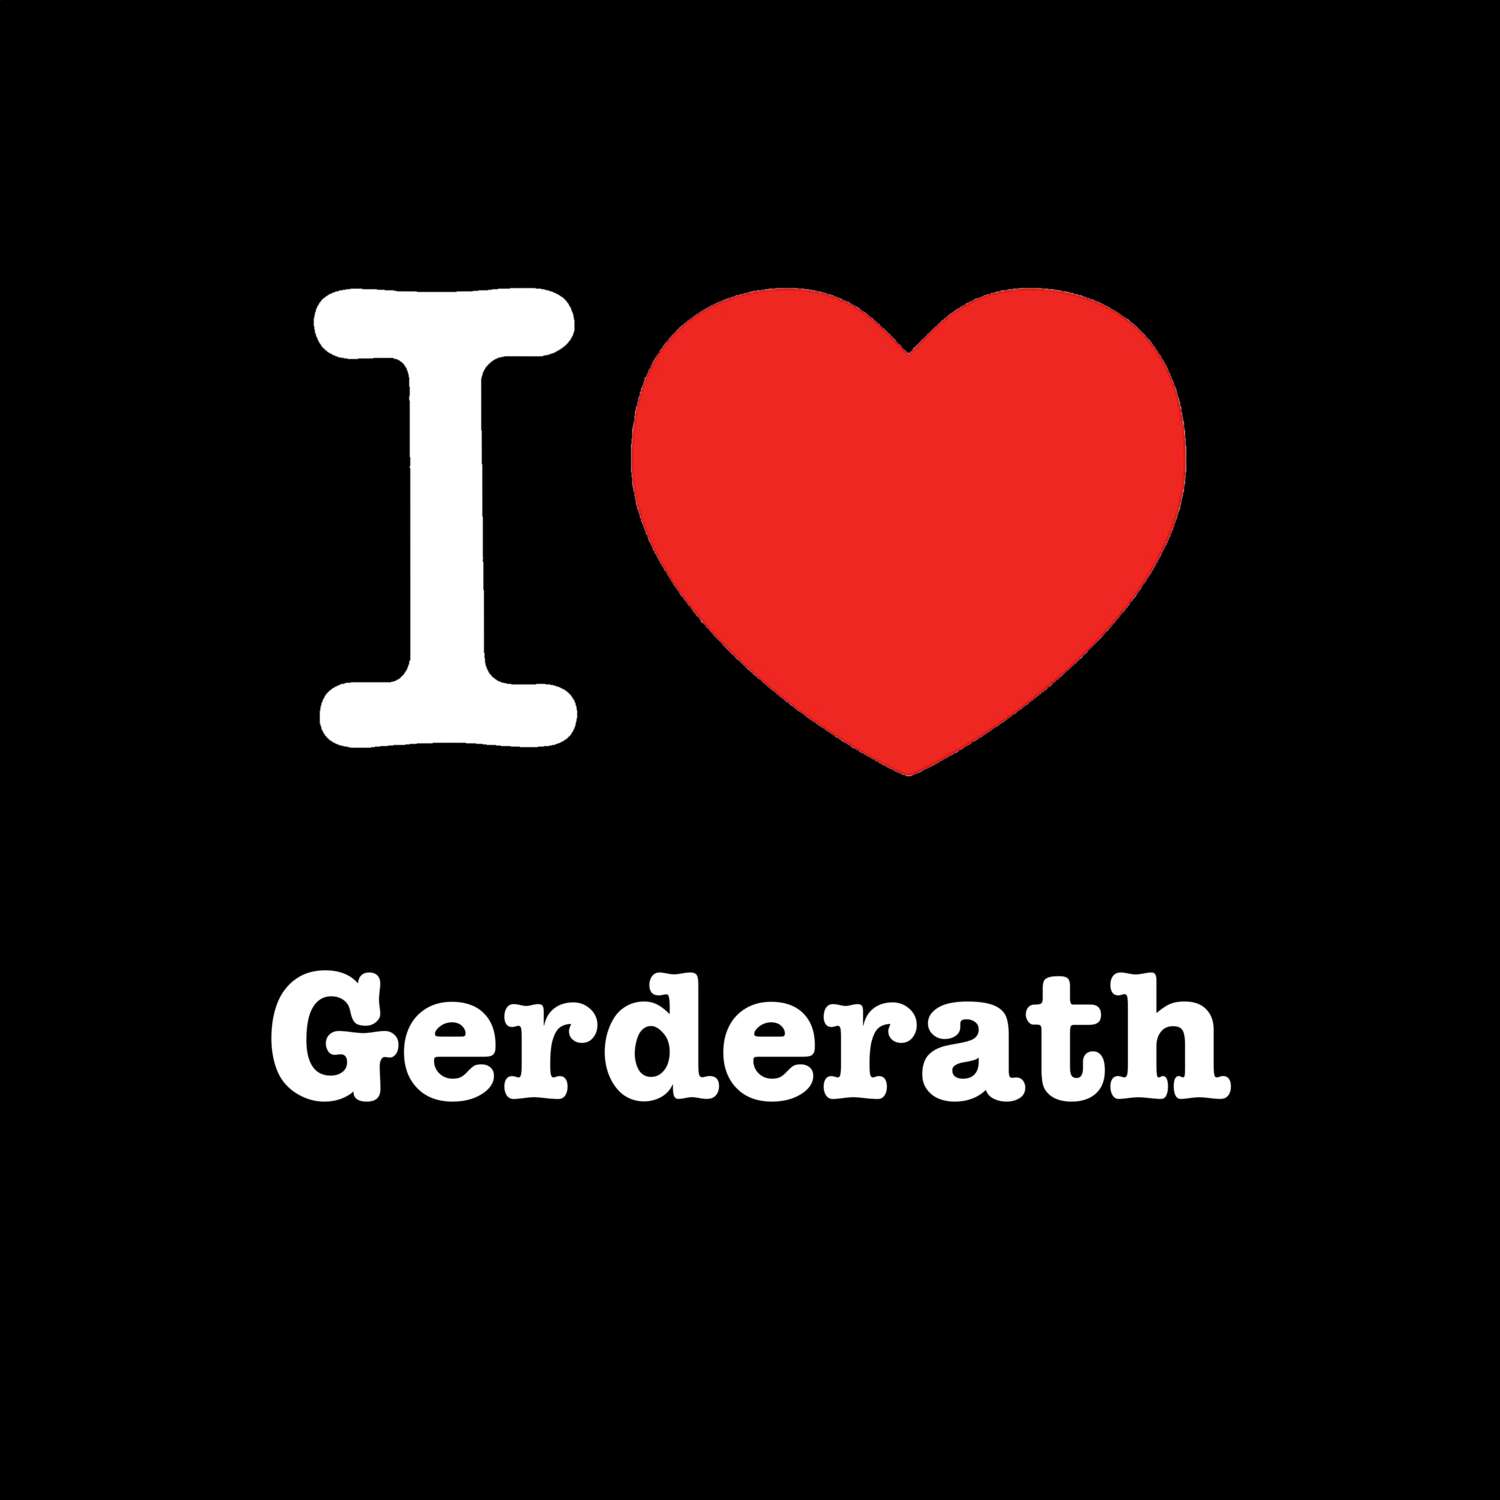 Gerderath T-Shirt »I love«